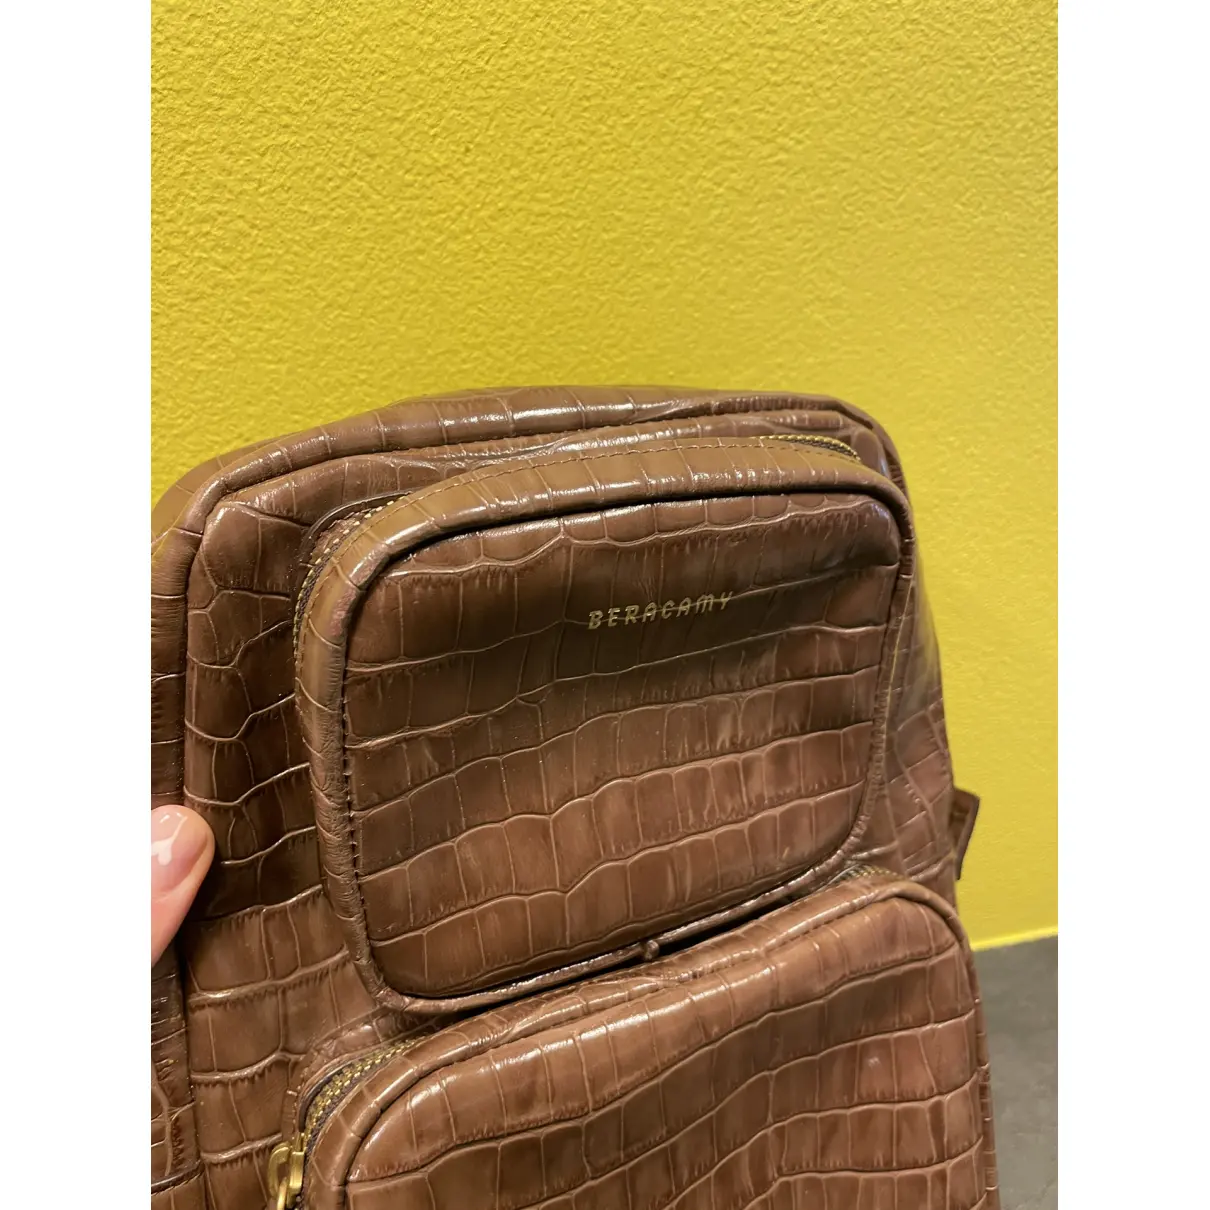 Buy Beracamy Leather backpack online